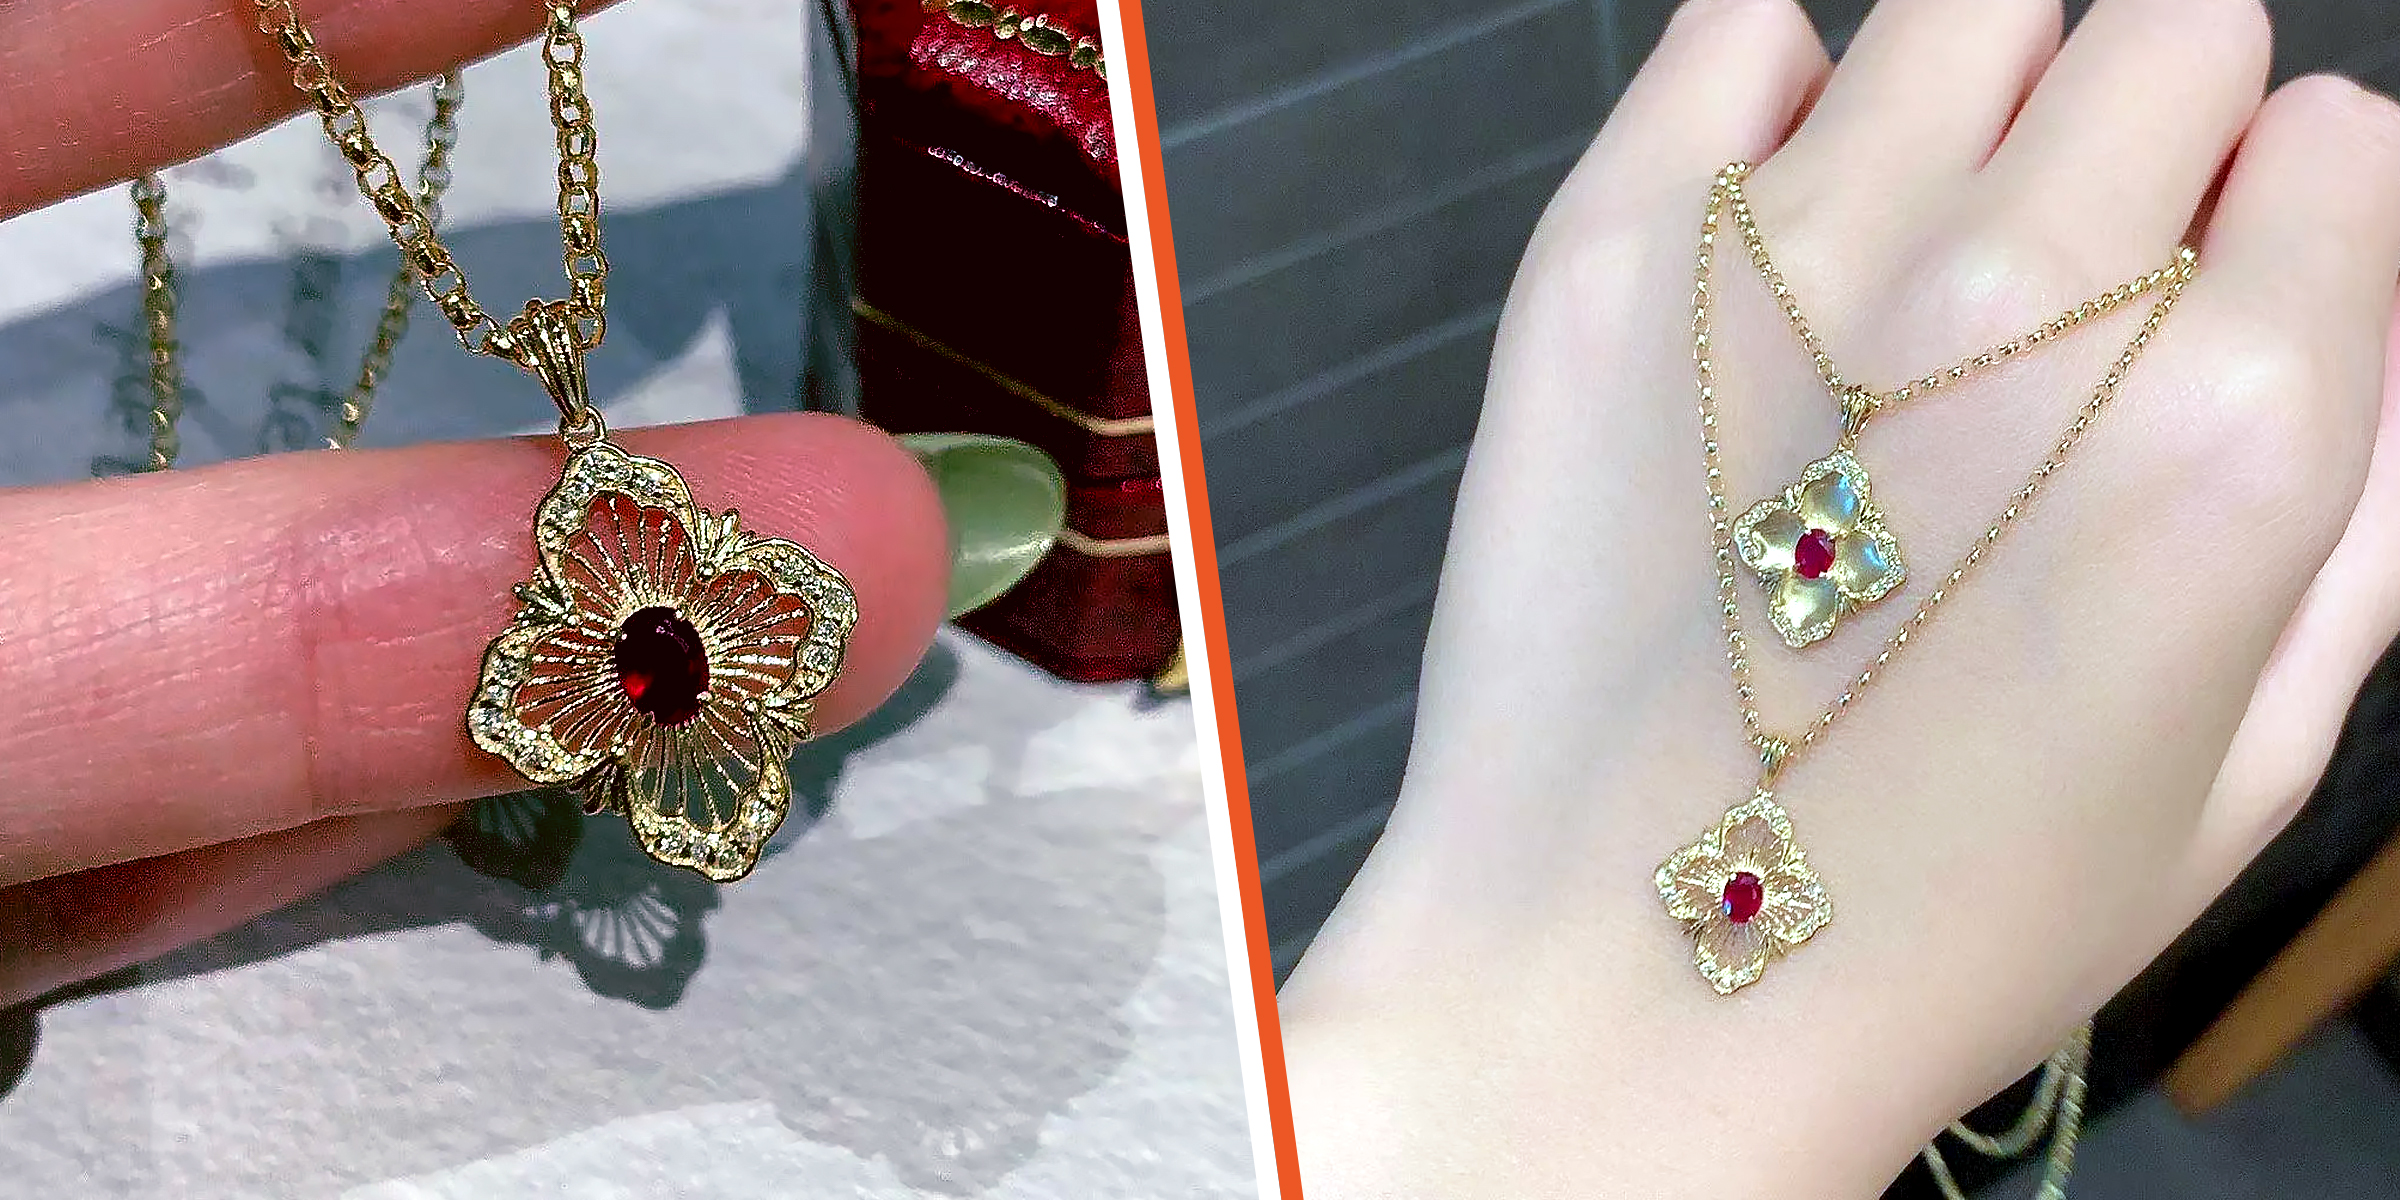 Collier à pendentifs en rubis | Source : Reddit/waifung18